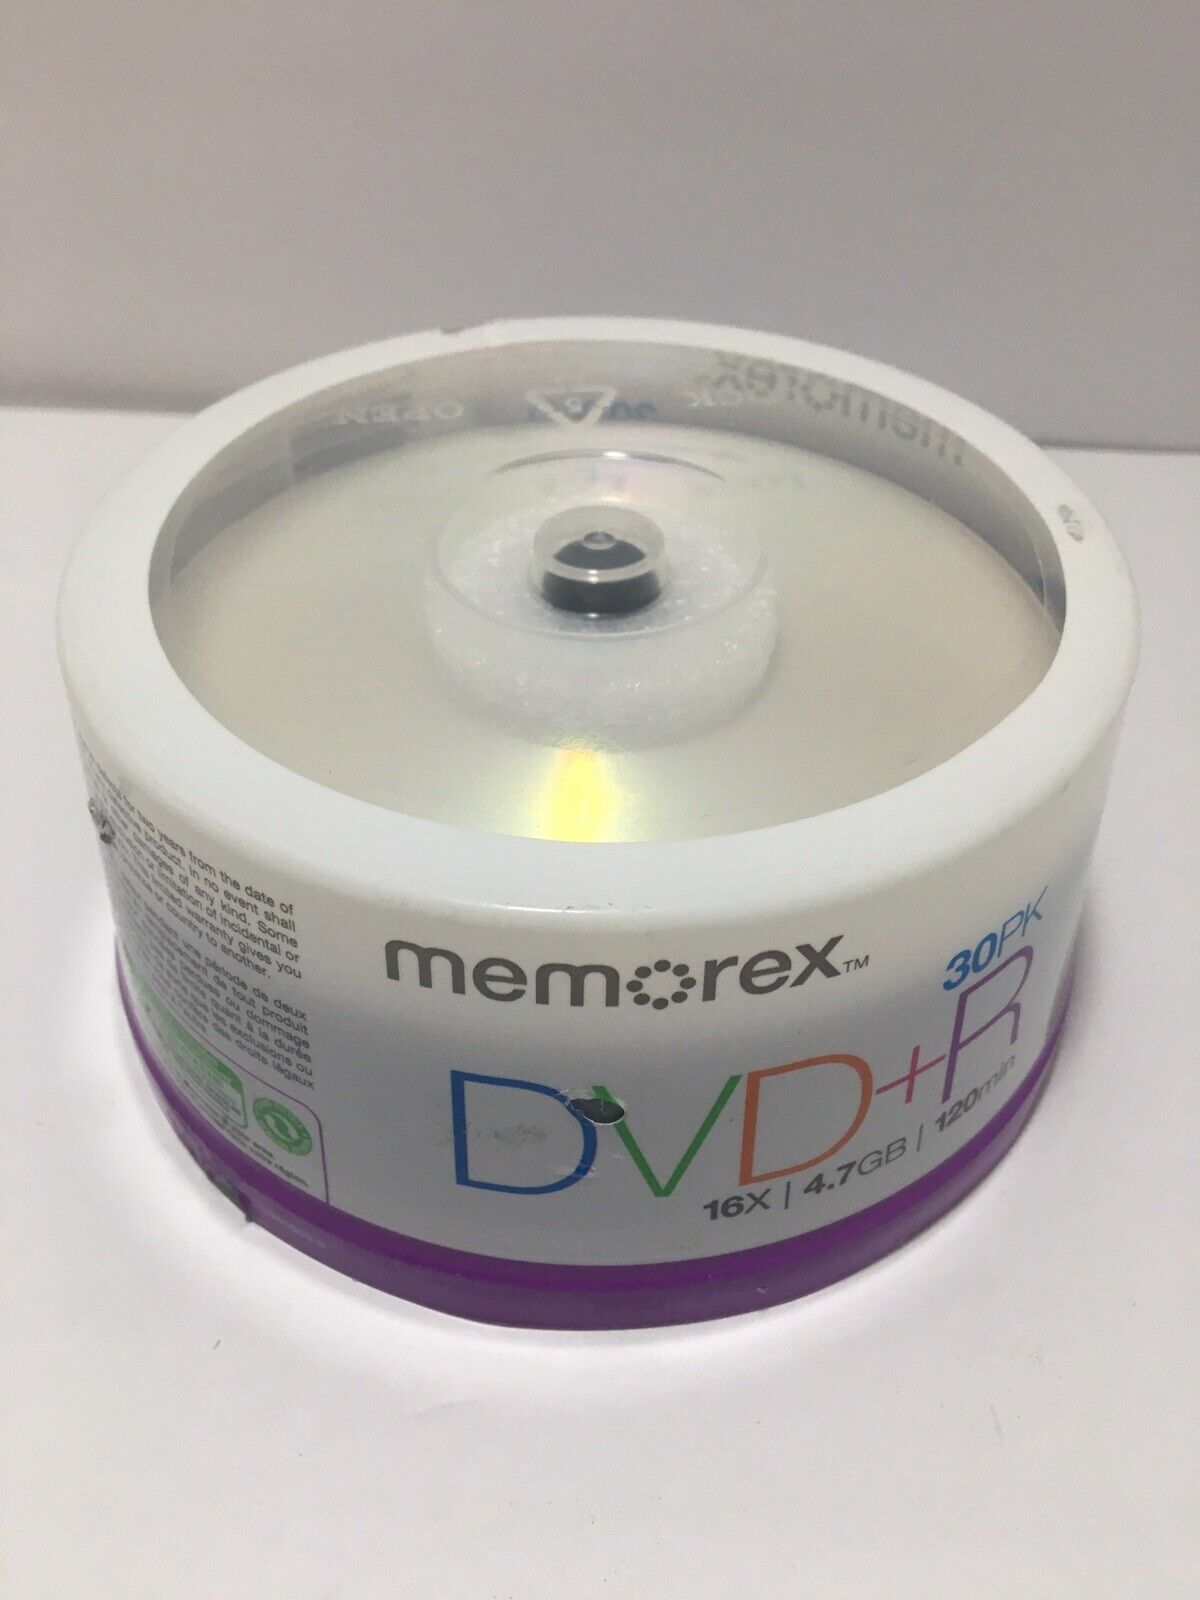 Memorex DVD-R 30Pk 16x4.7GB 120Min Brand New Factory Sealed